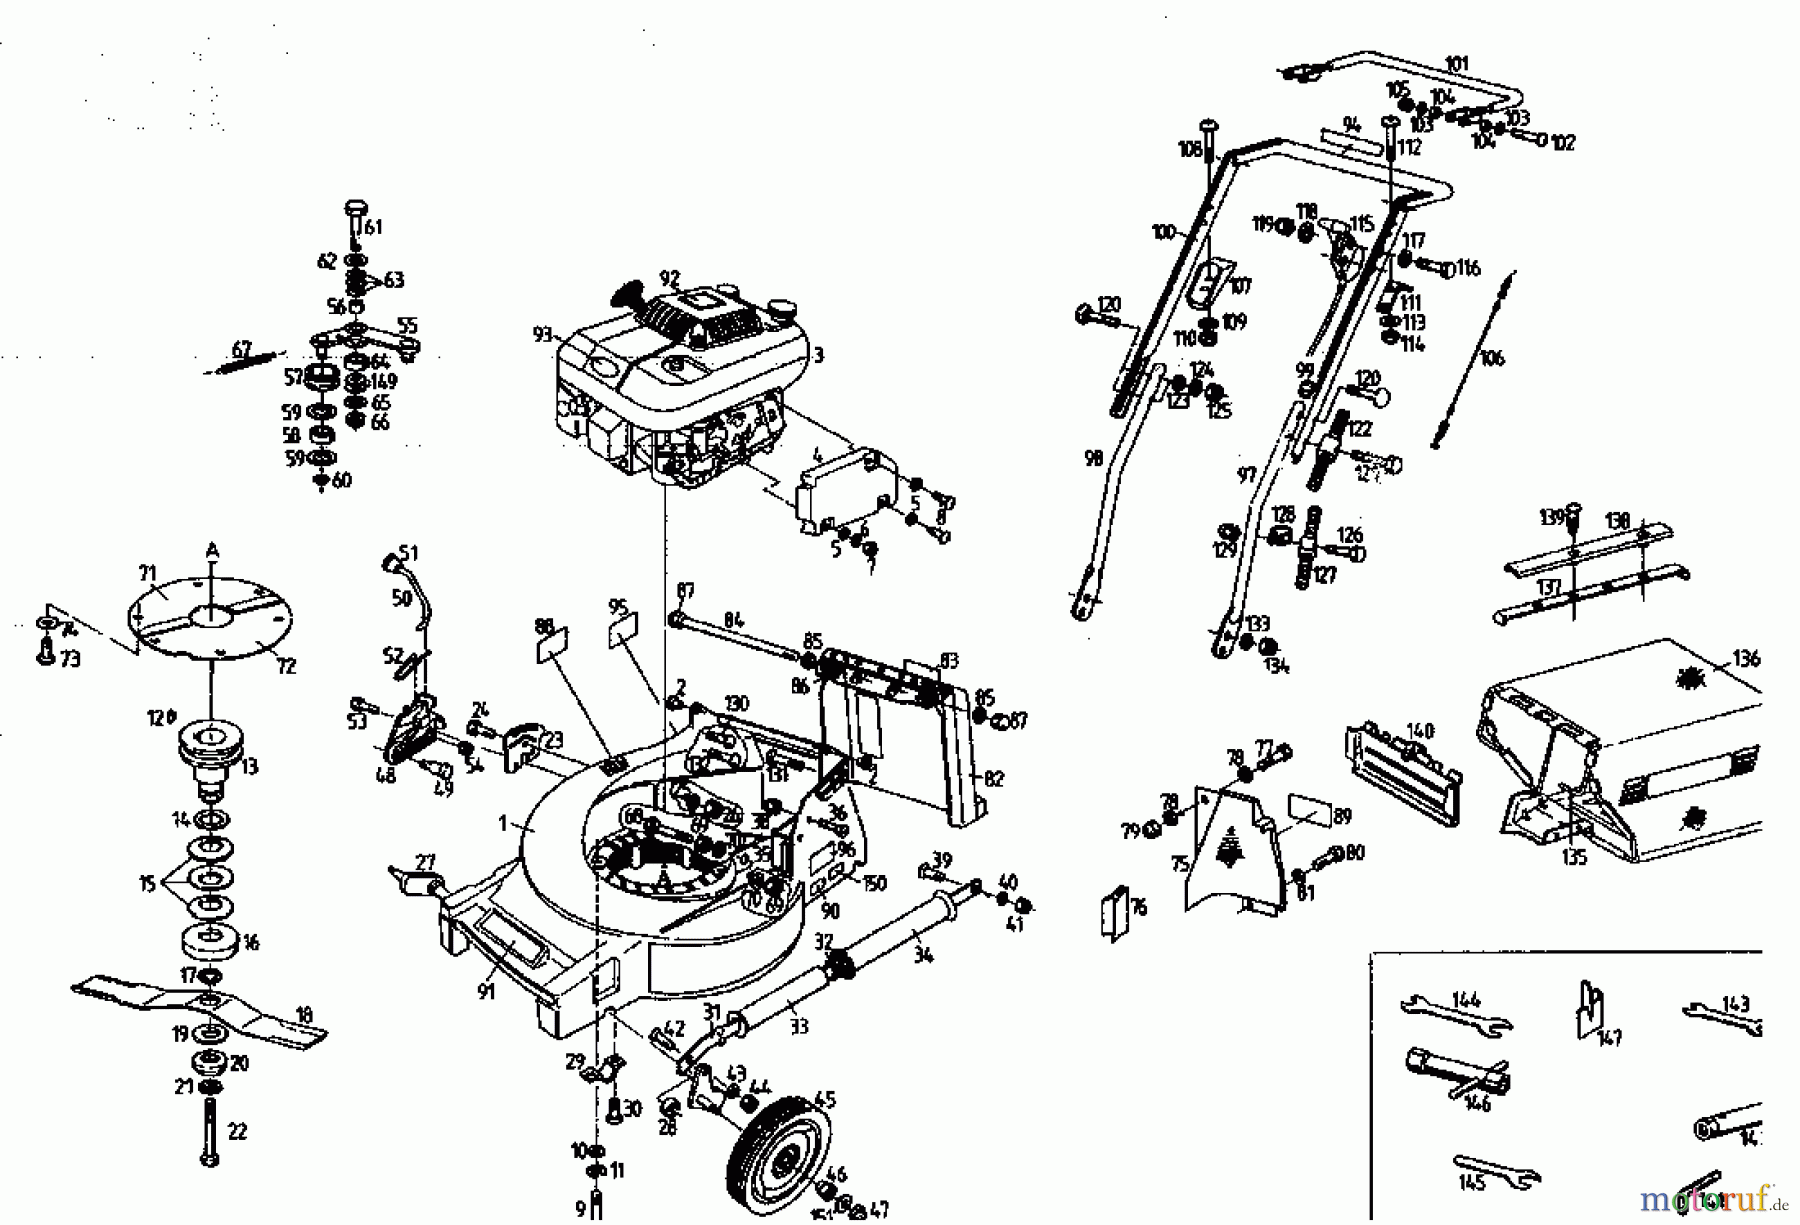  Gutbrod Petrol mower self propelled MH 534 PR 04017.03  (1996) Basic machine